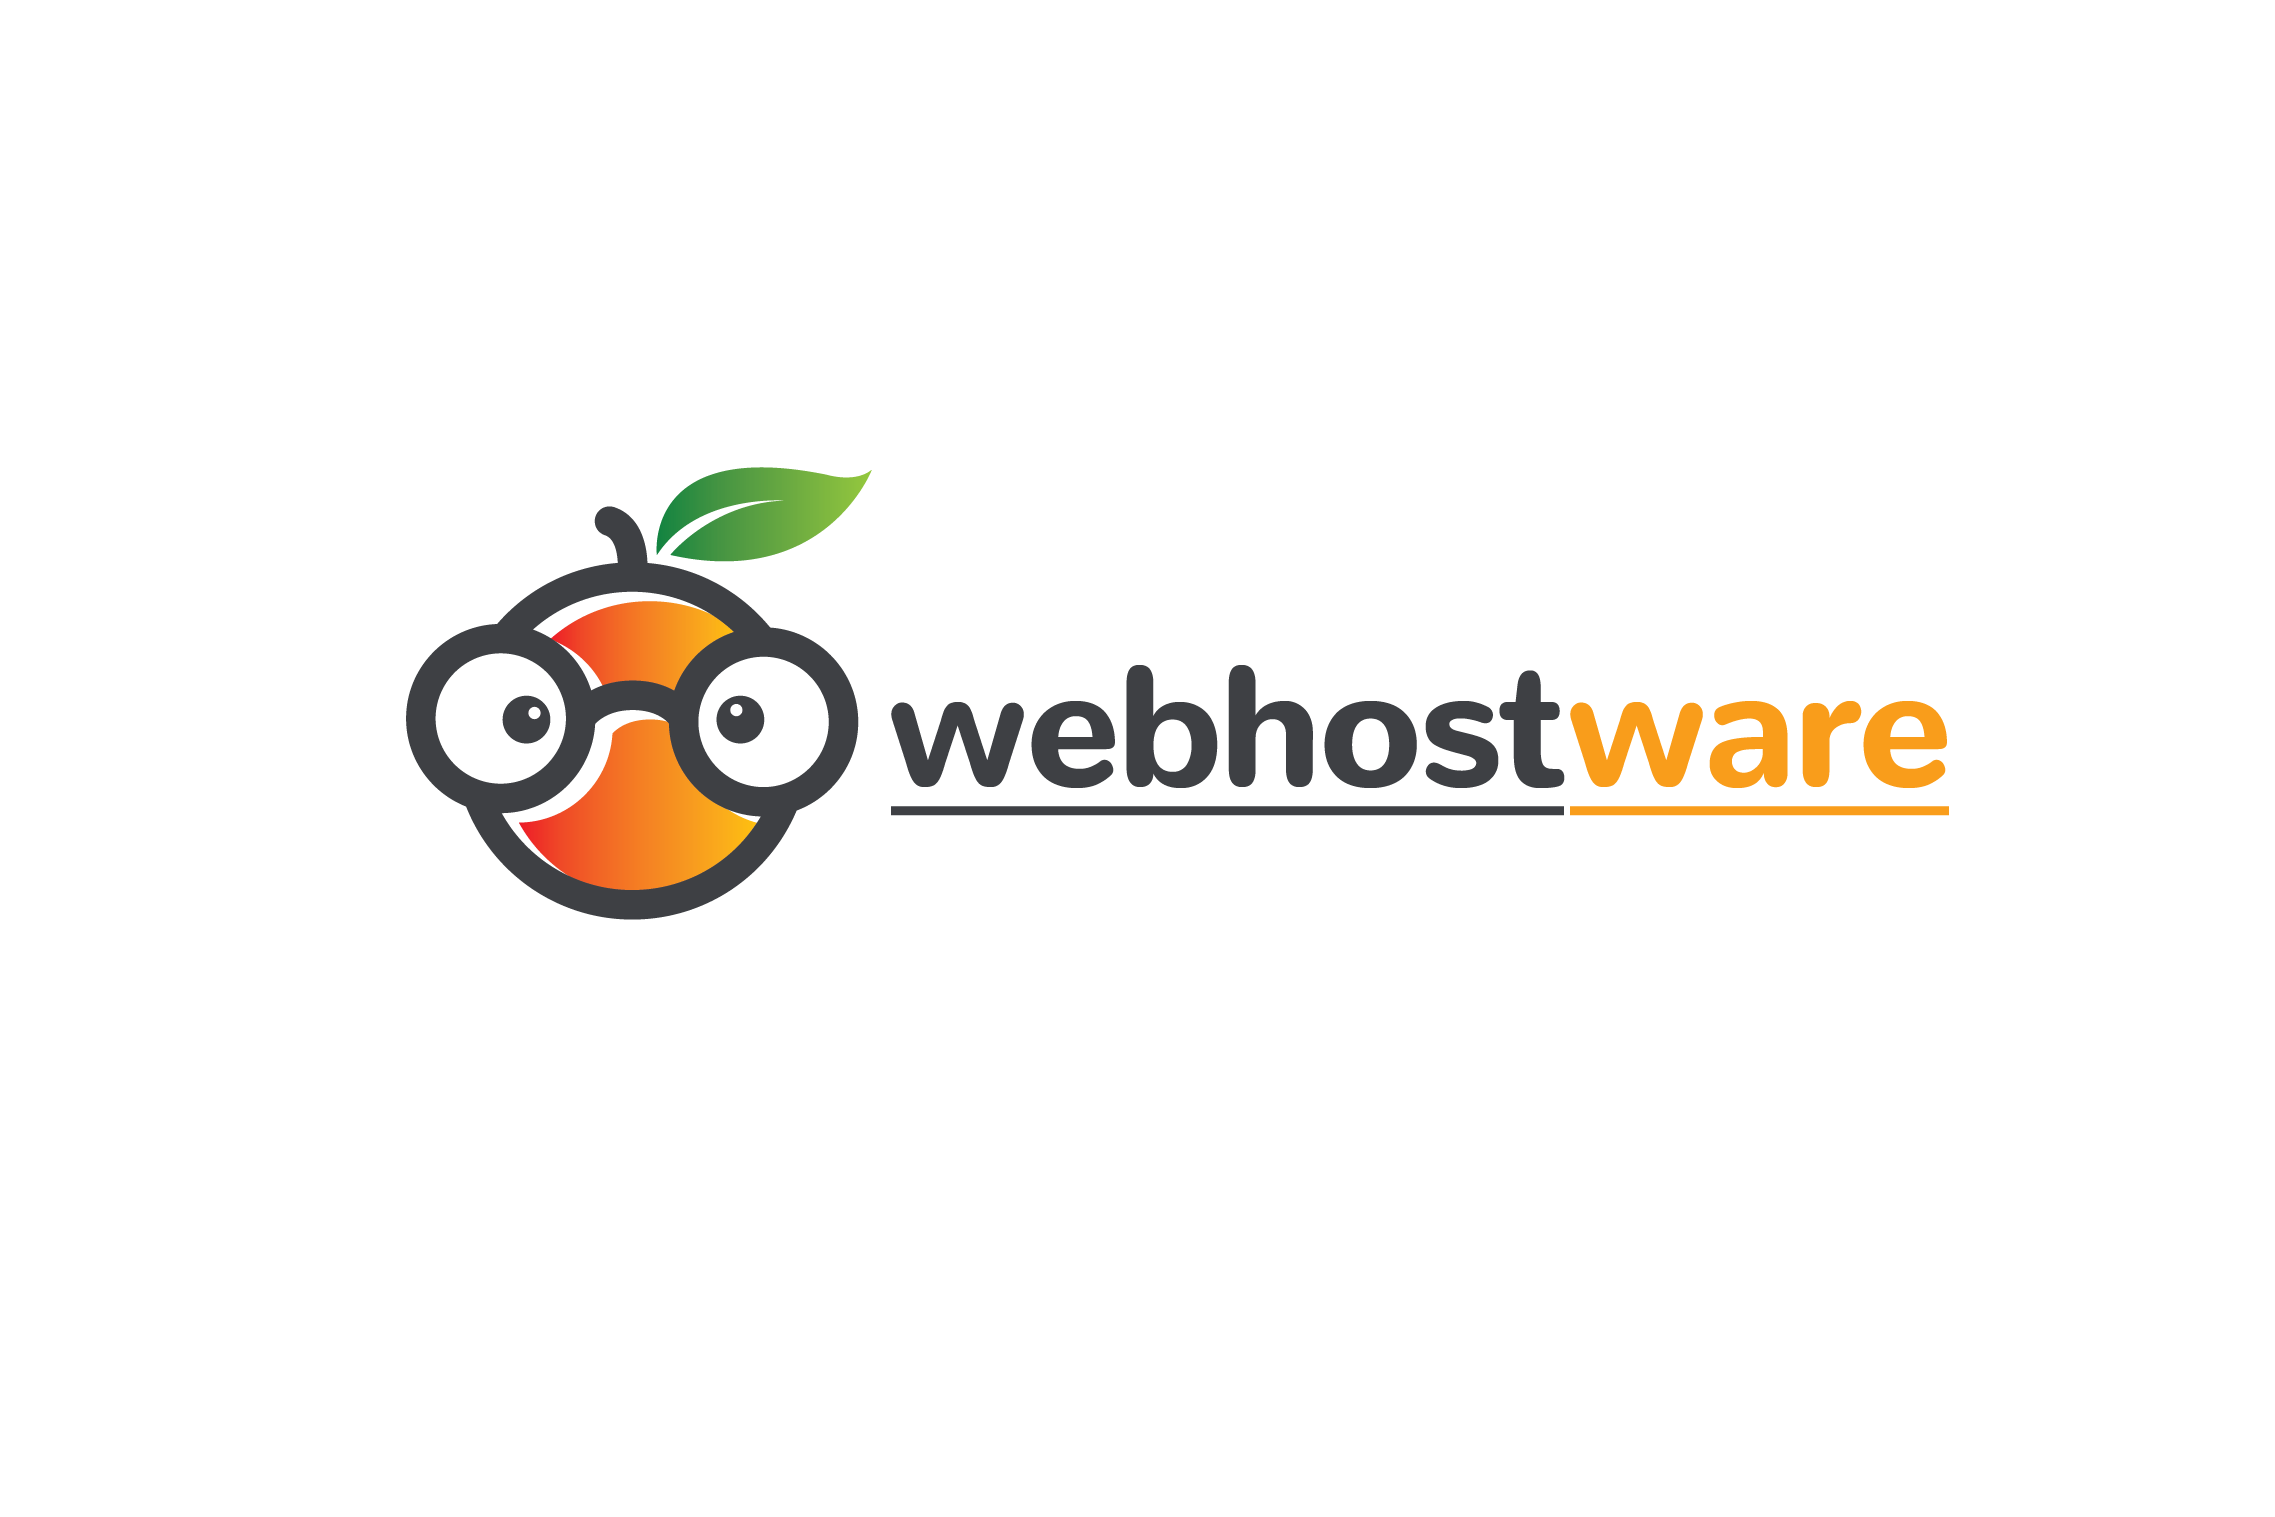 Webhostware